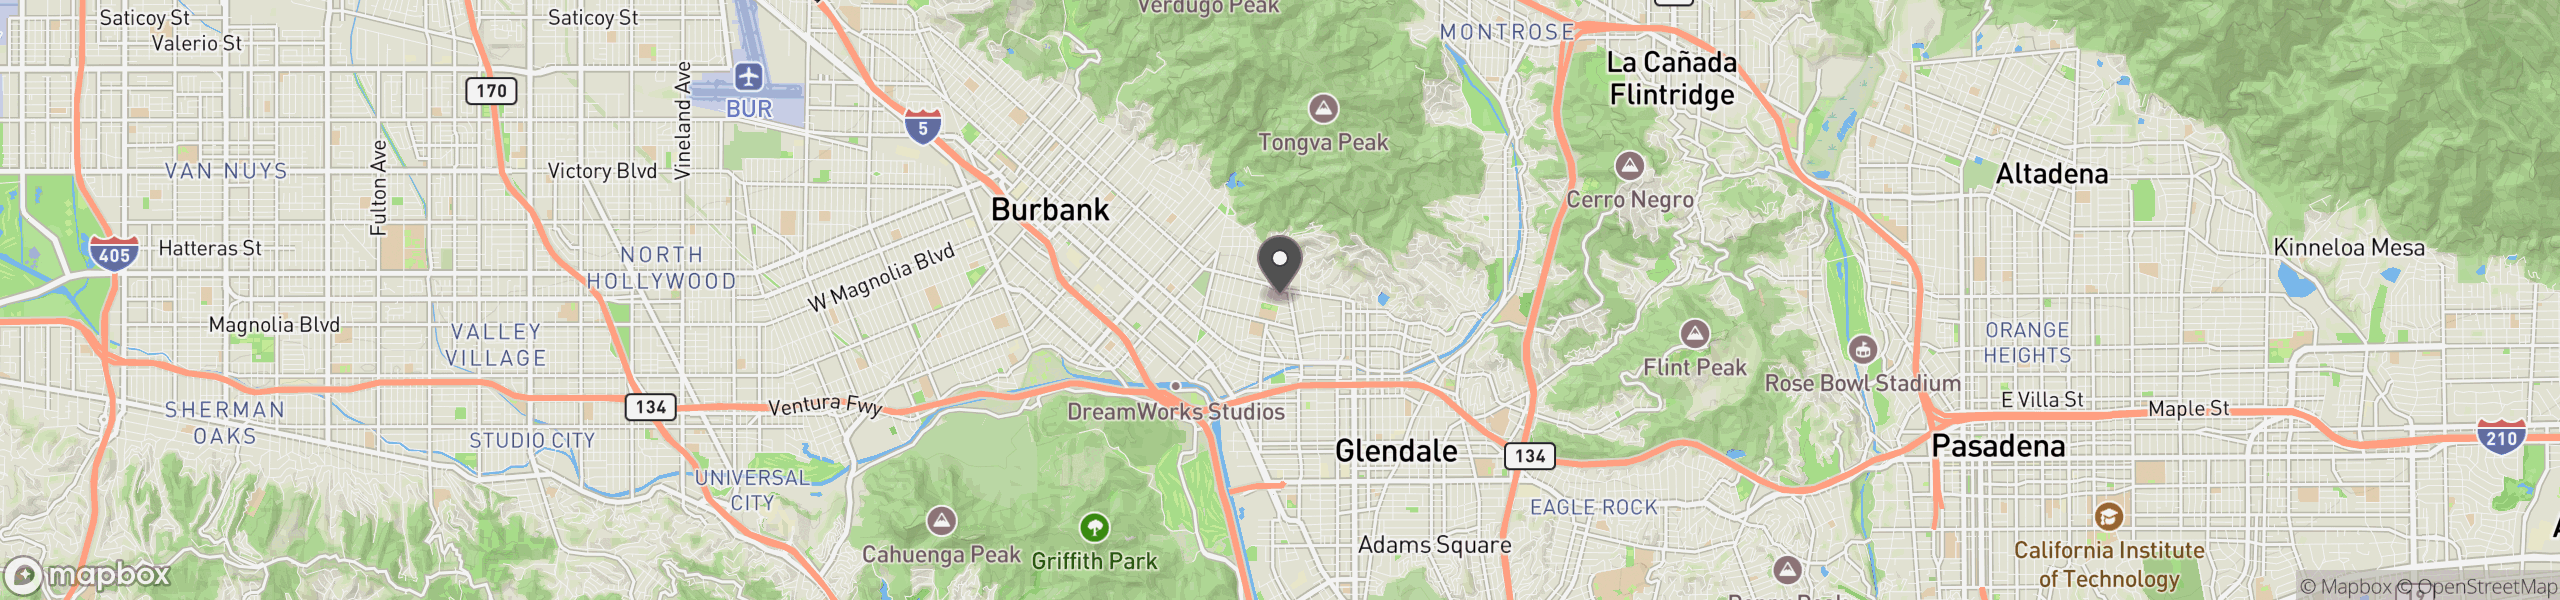 Glendale, CA